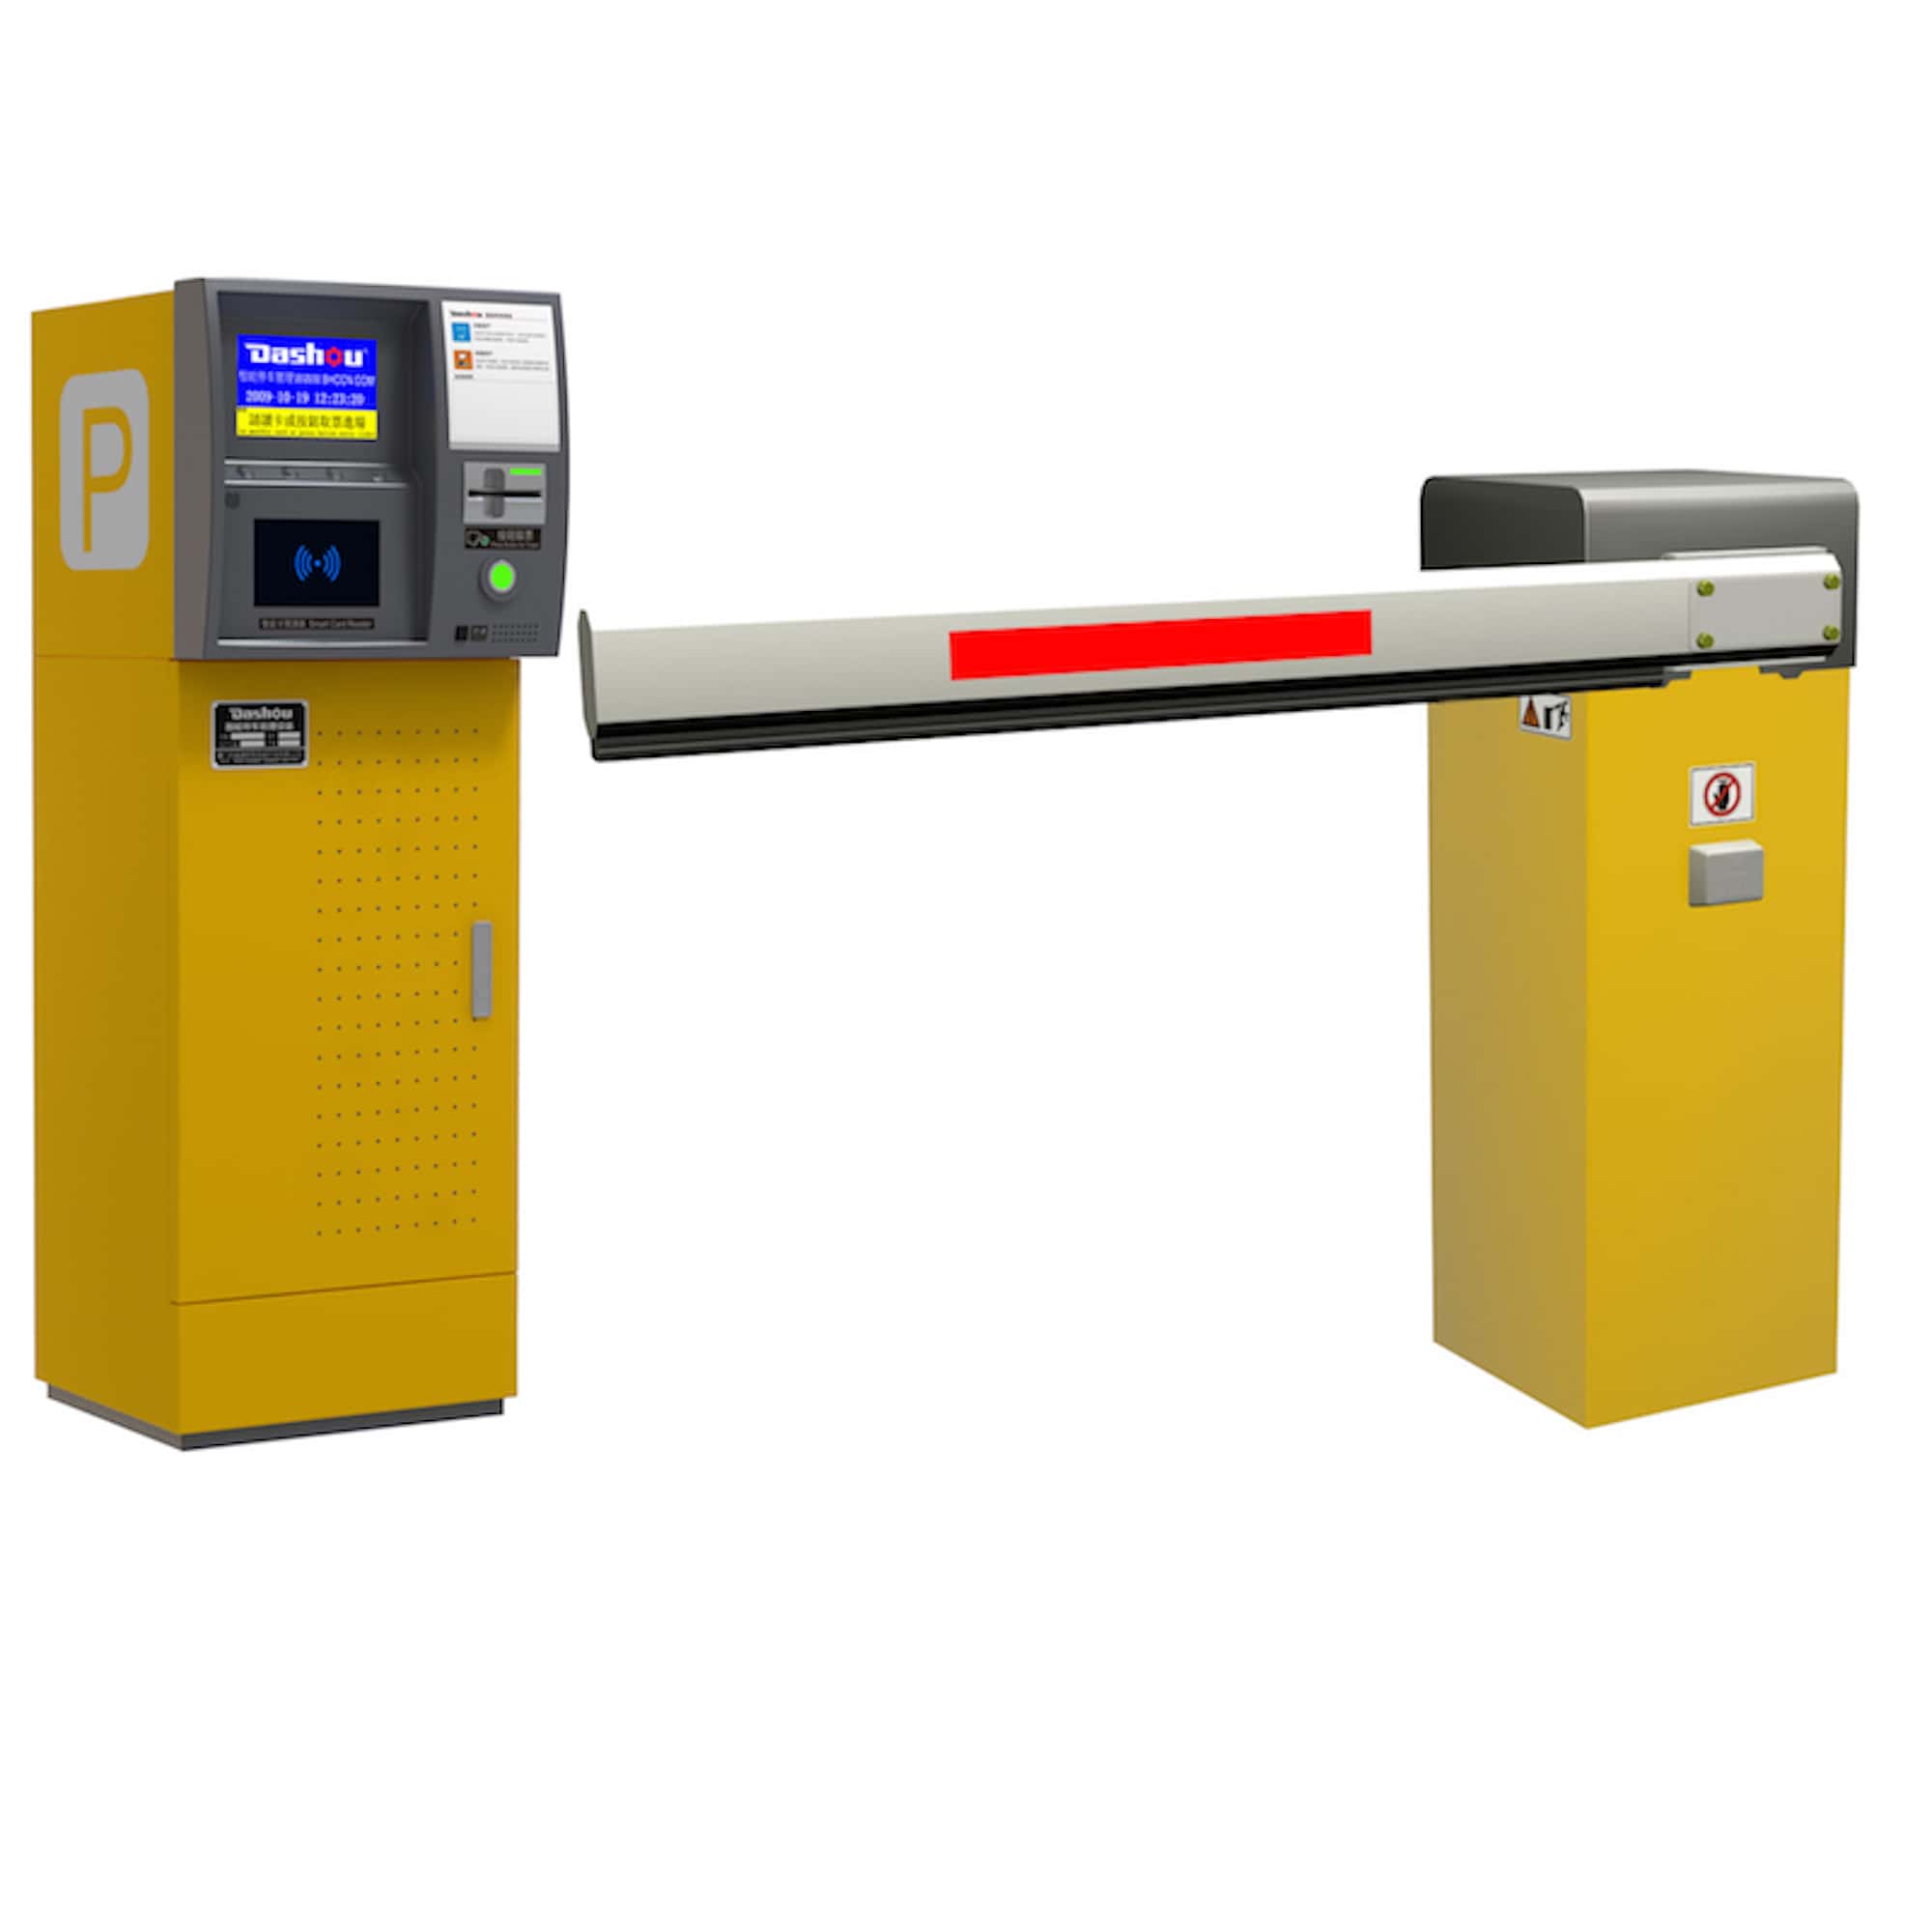 V32-910F Sistema de estacionamiento de dispensación de boletos de pago central
